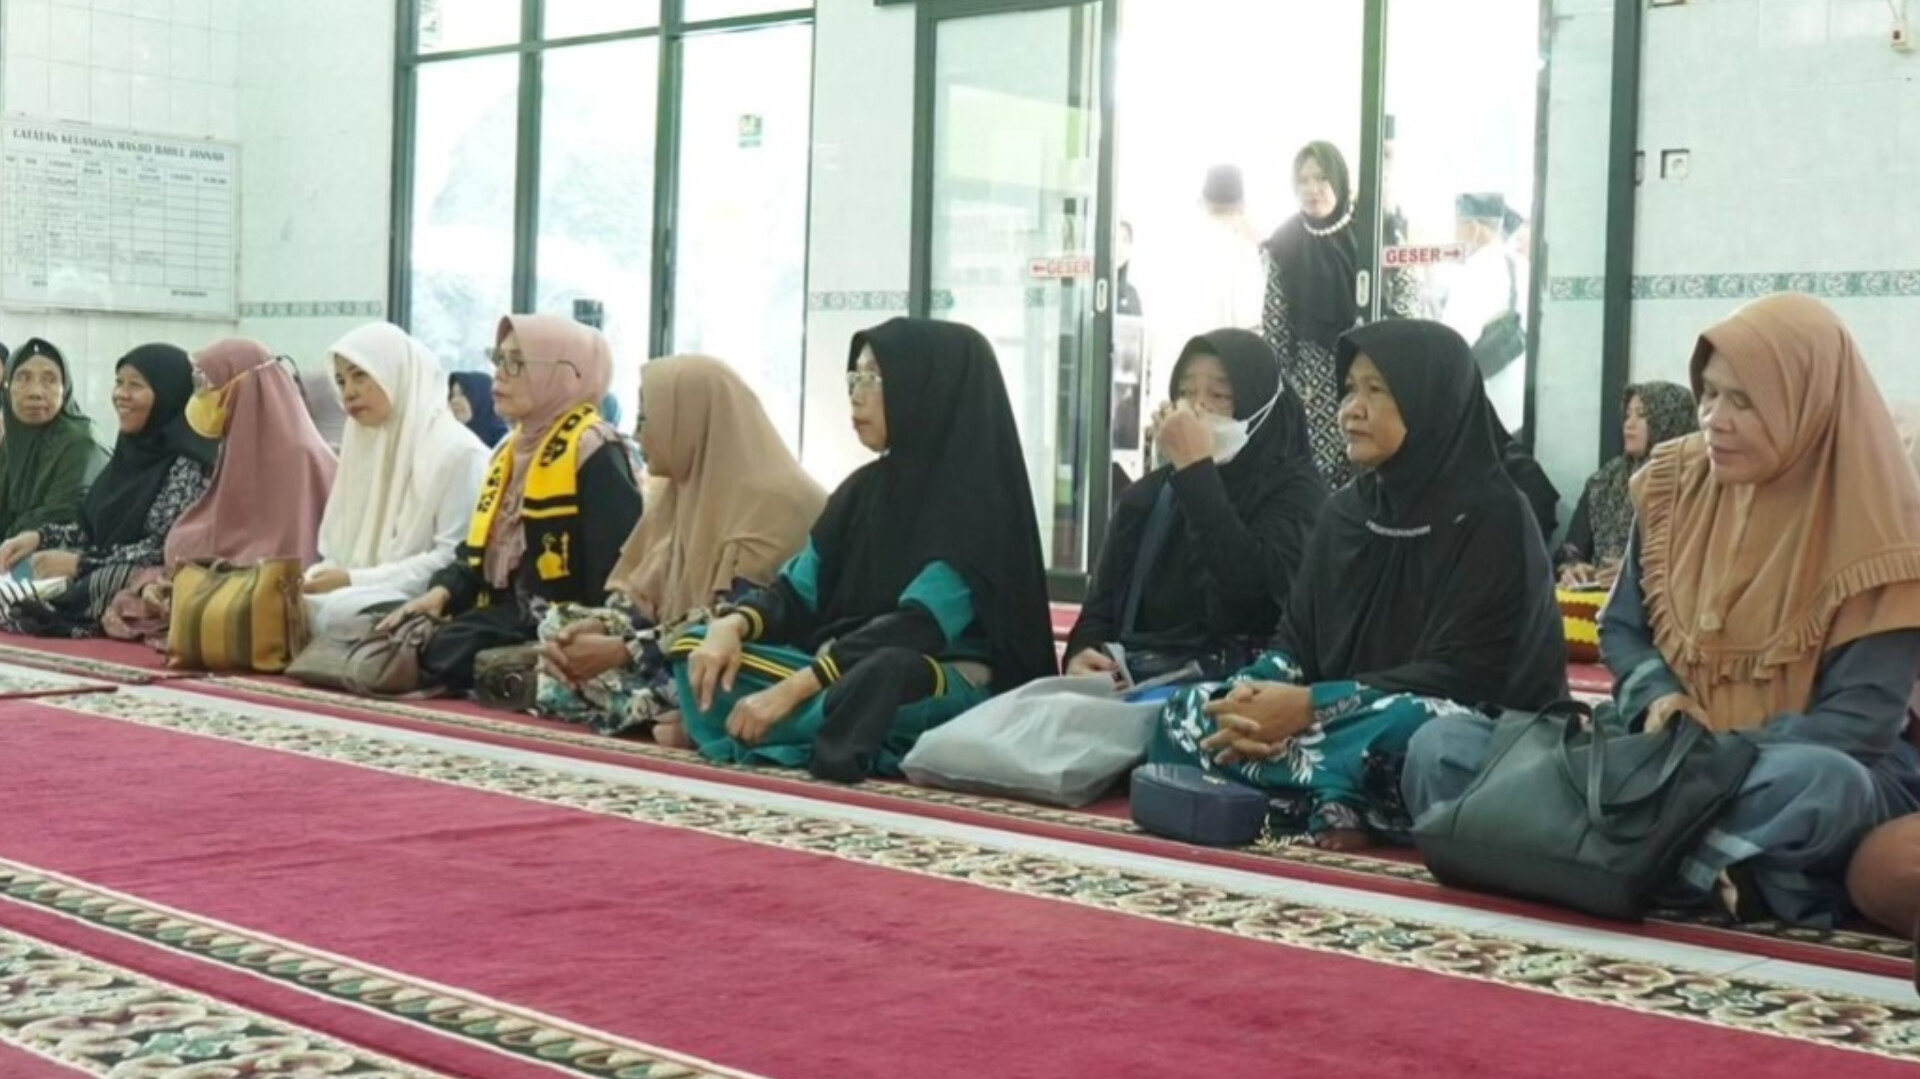 Antar CJH ke Asrama Haji, Pemkot Prabumulih Siapkan 5 Bus 